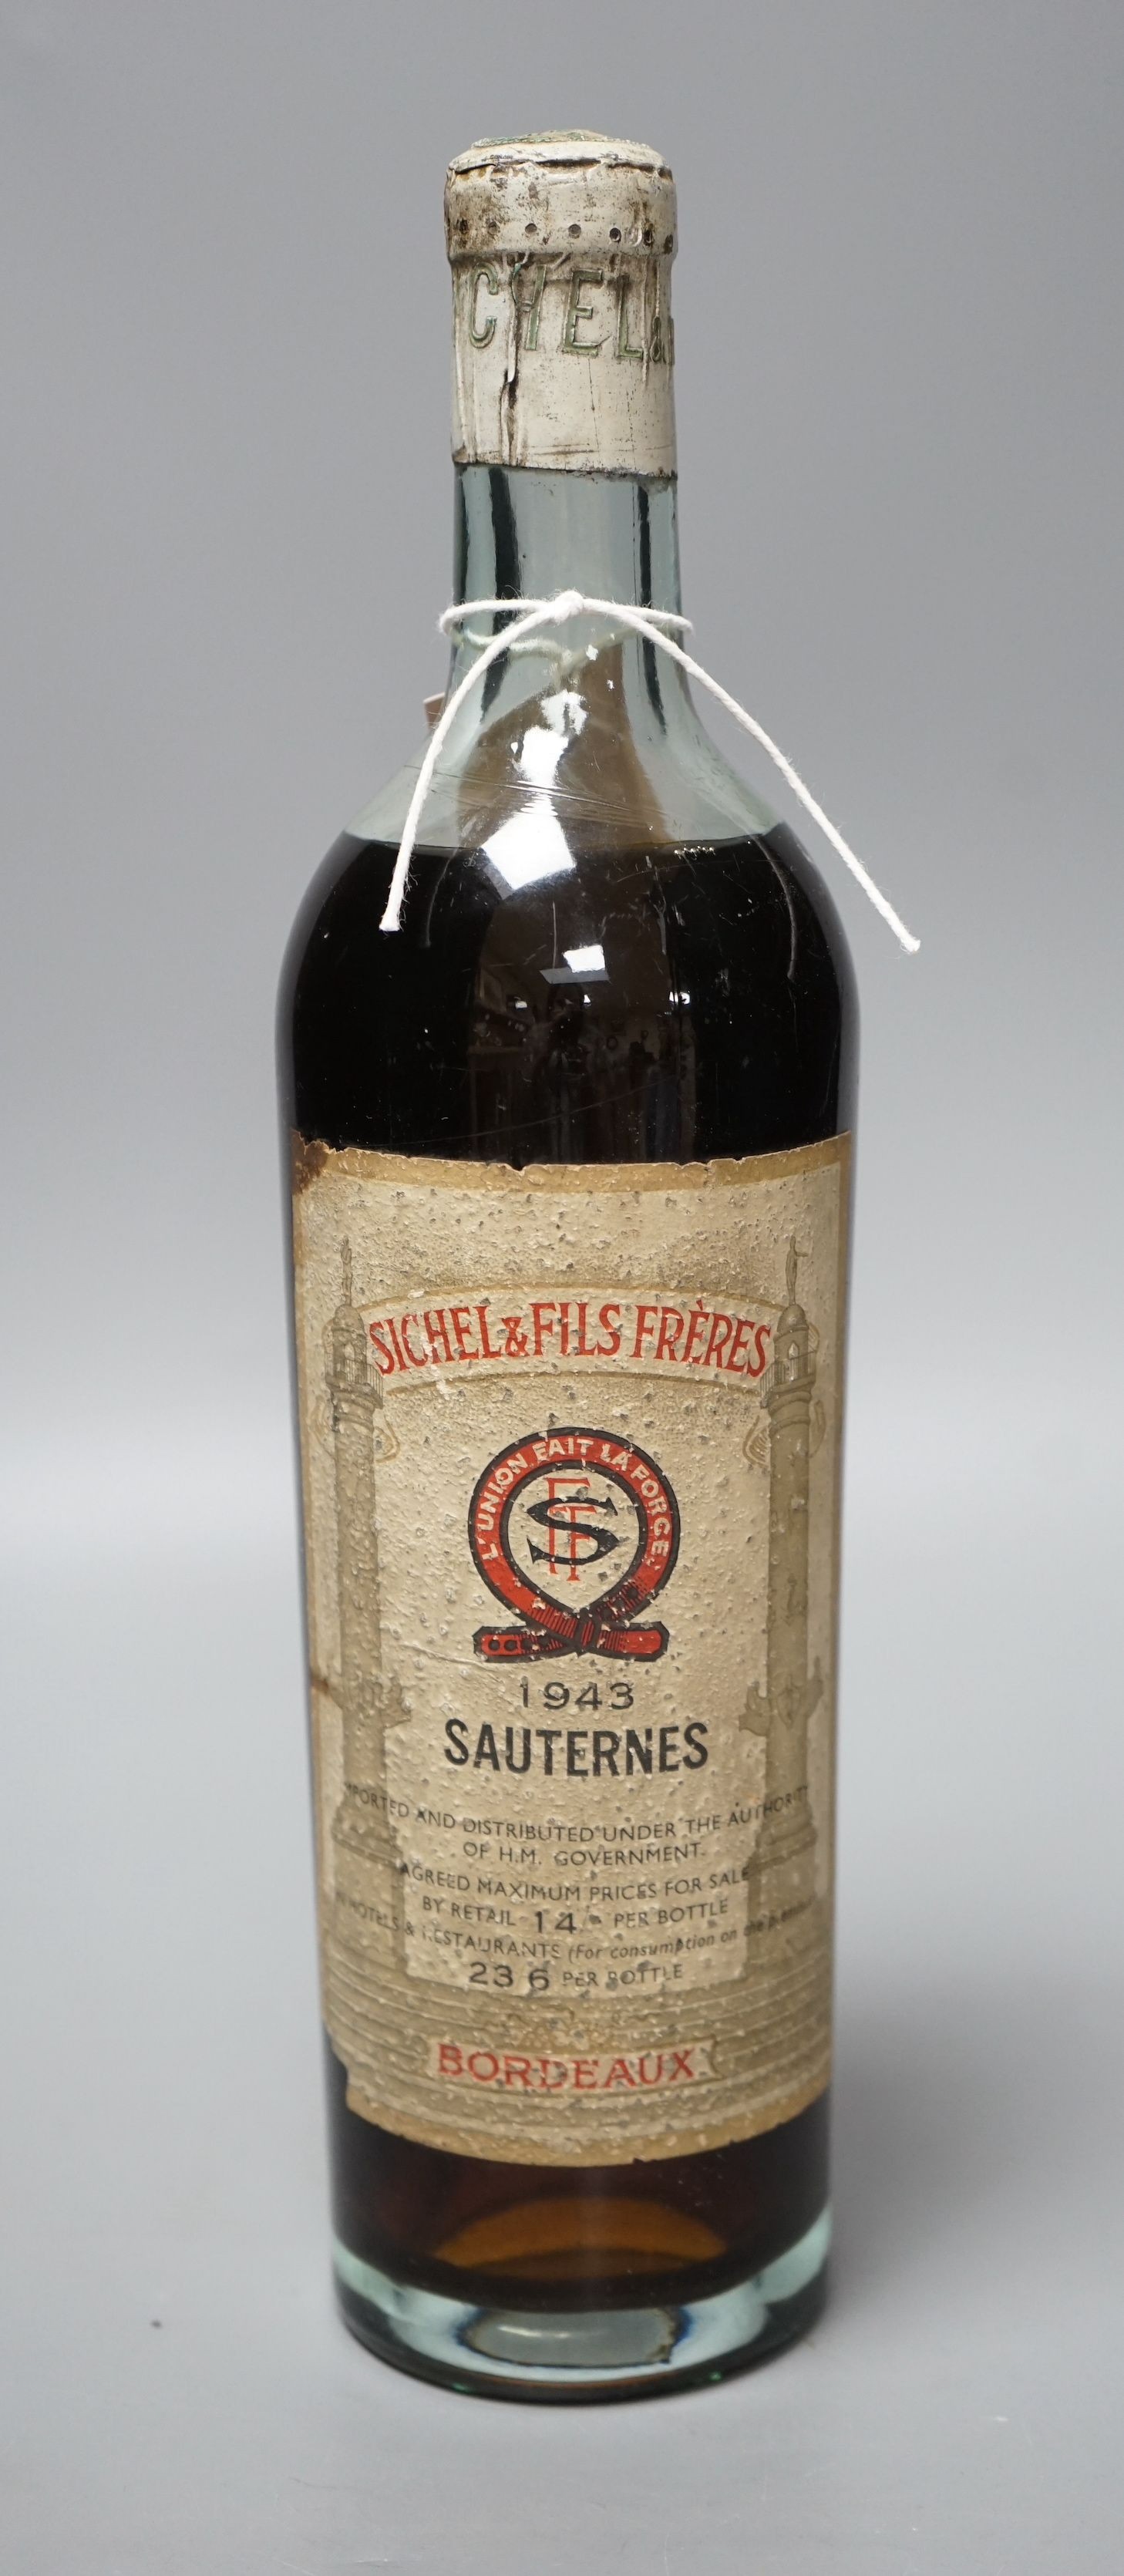 One bottle of Sauternes 1943